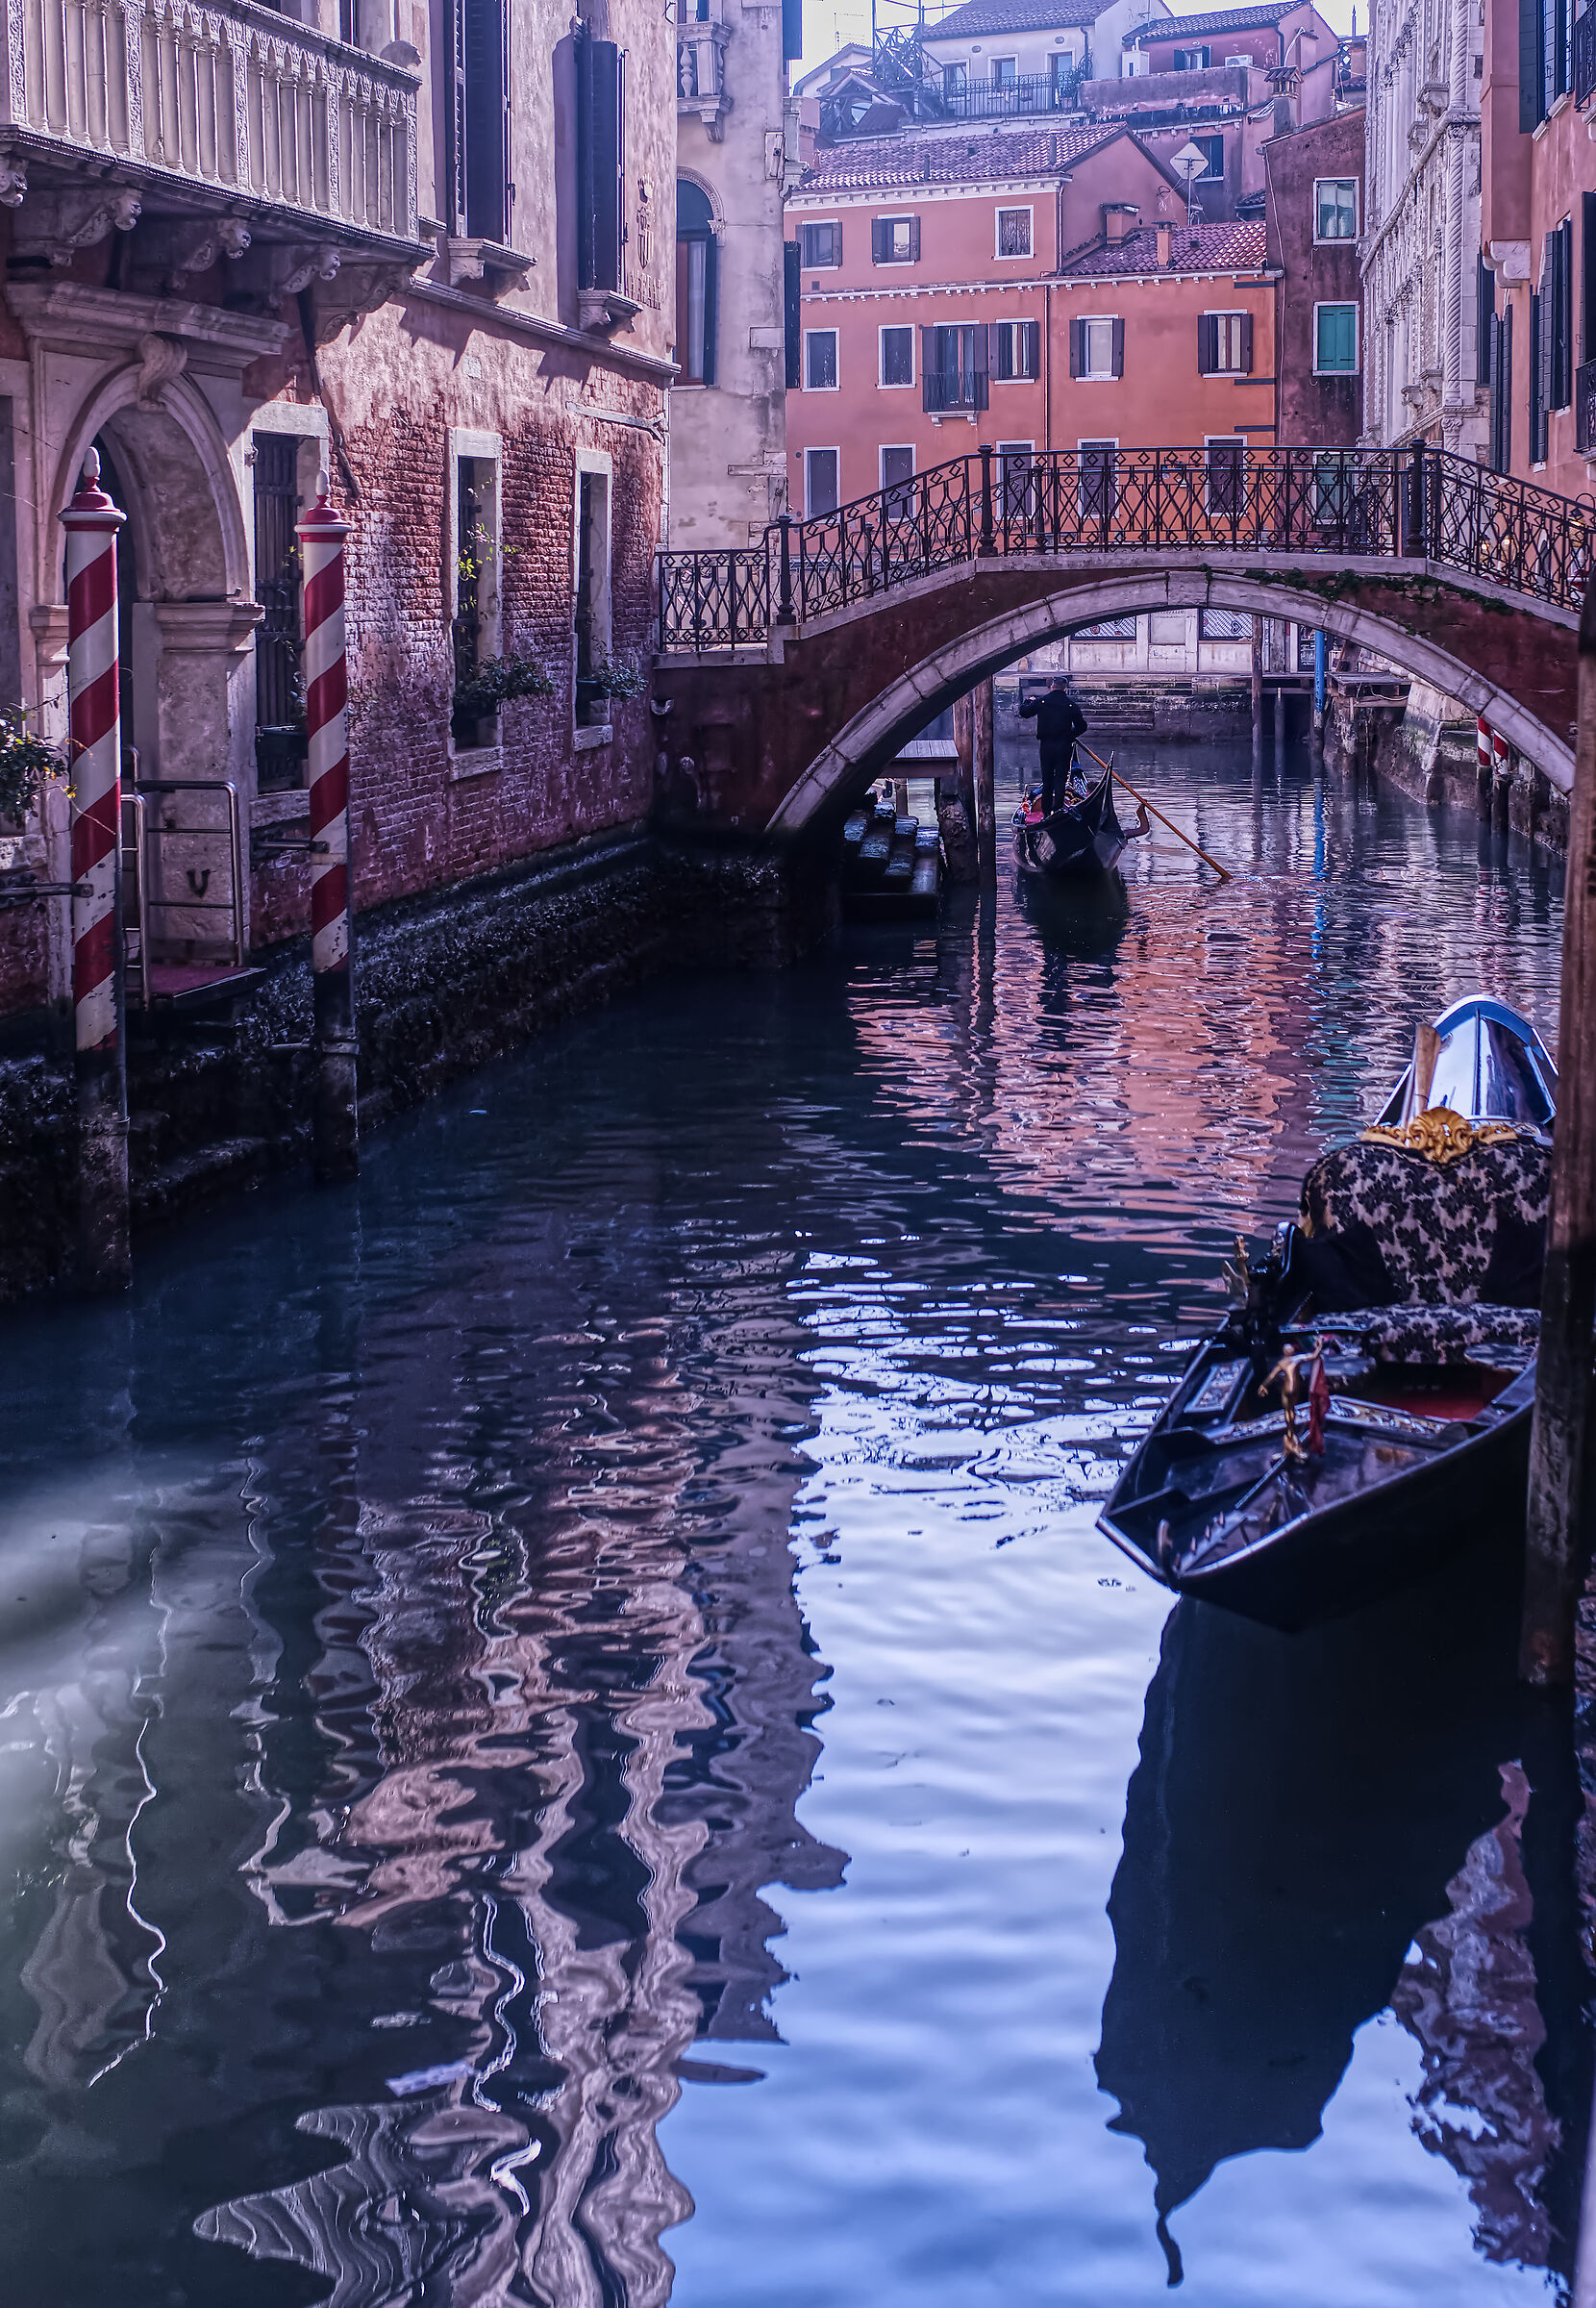 The magic of Venice...